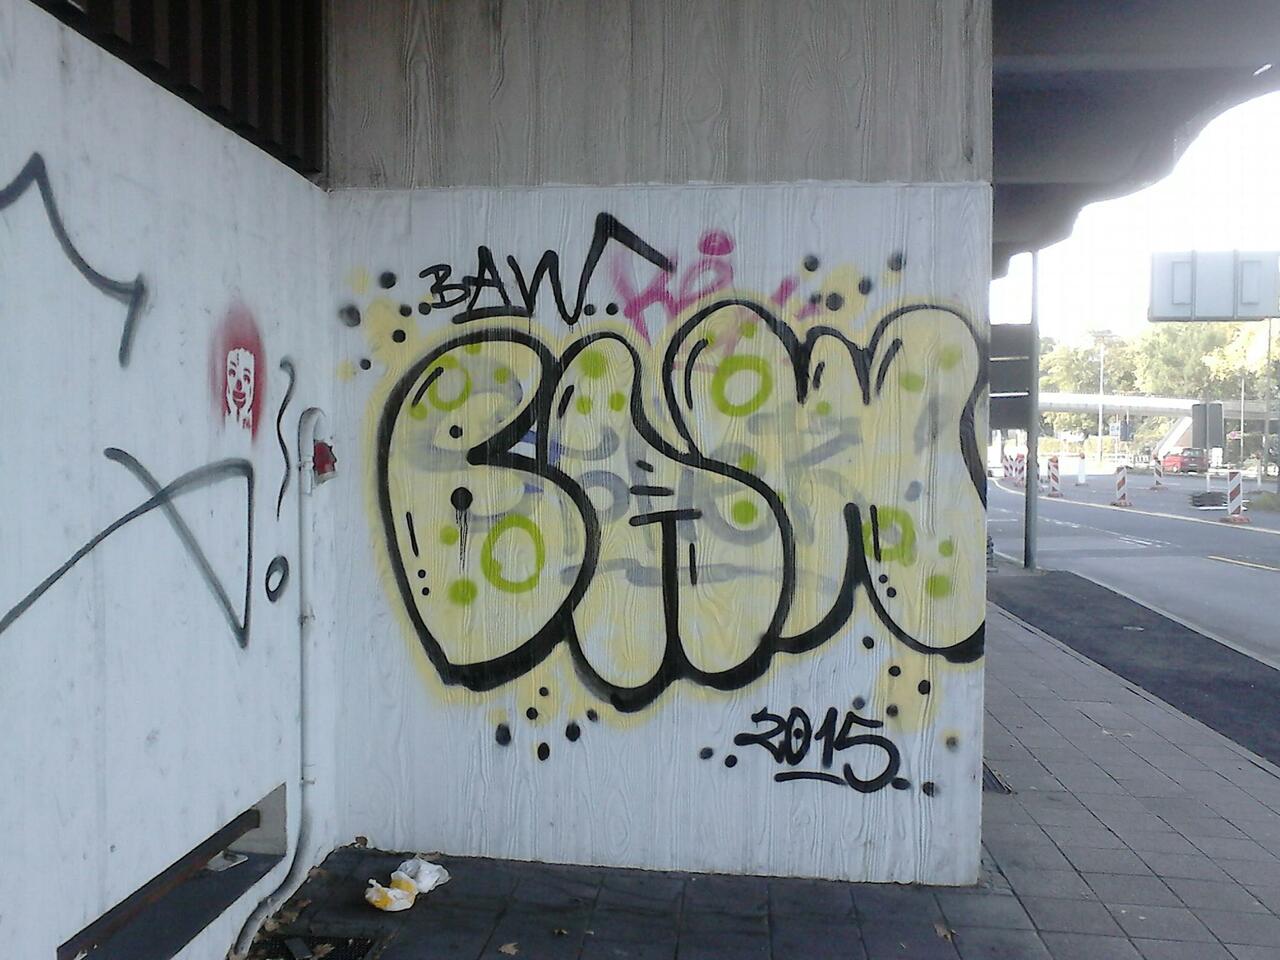 Graffiti Karlsruhe, Germany 
#streetart #art #urbanart #graffiti #karlsruhe http://t.co/cHnNlLfL2i